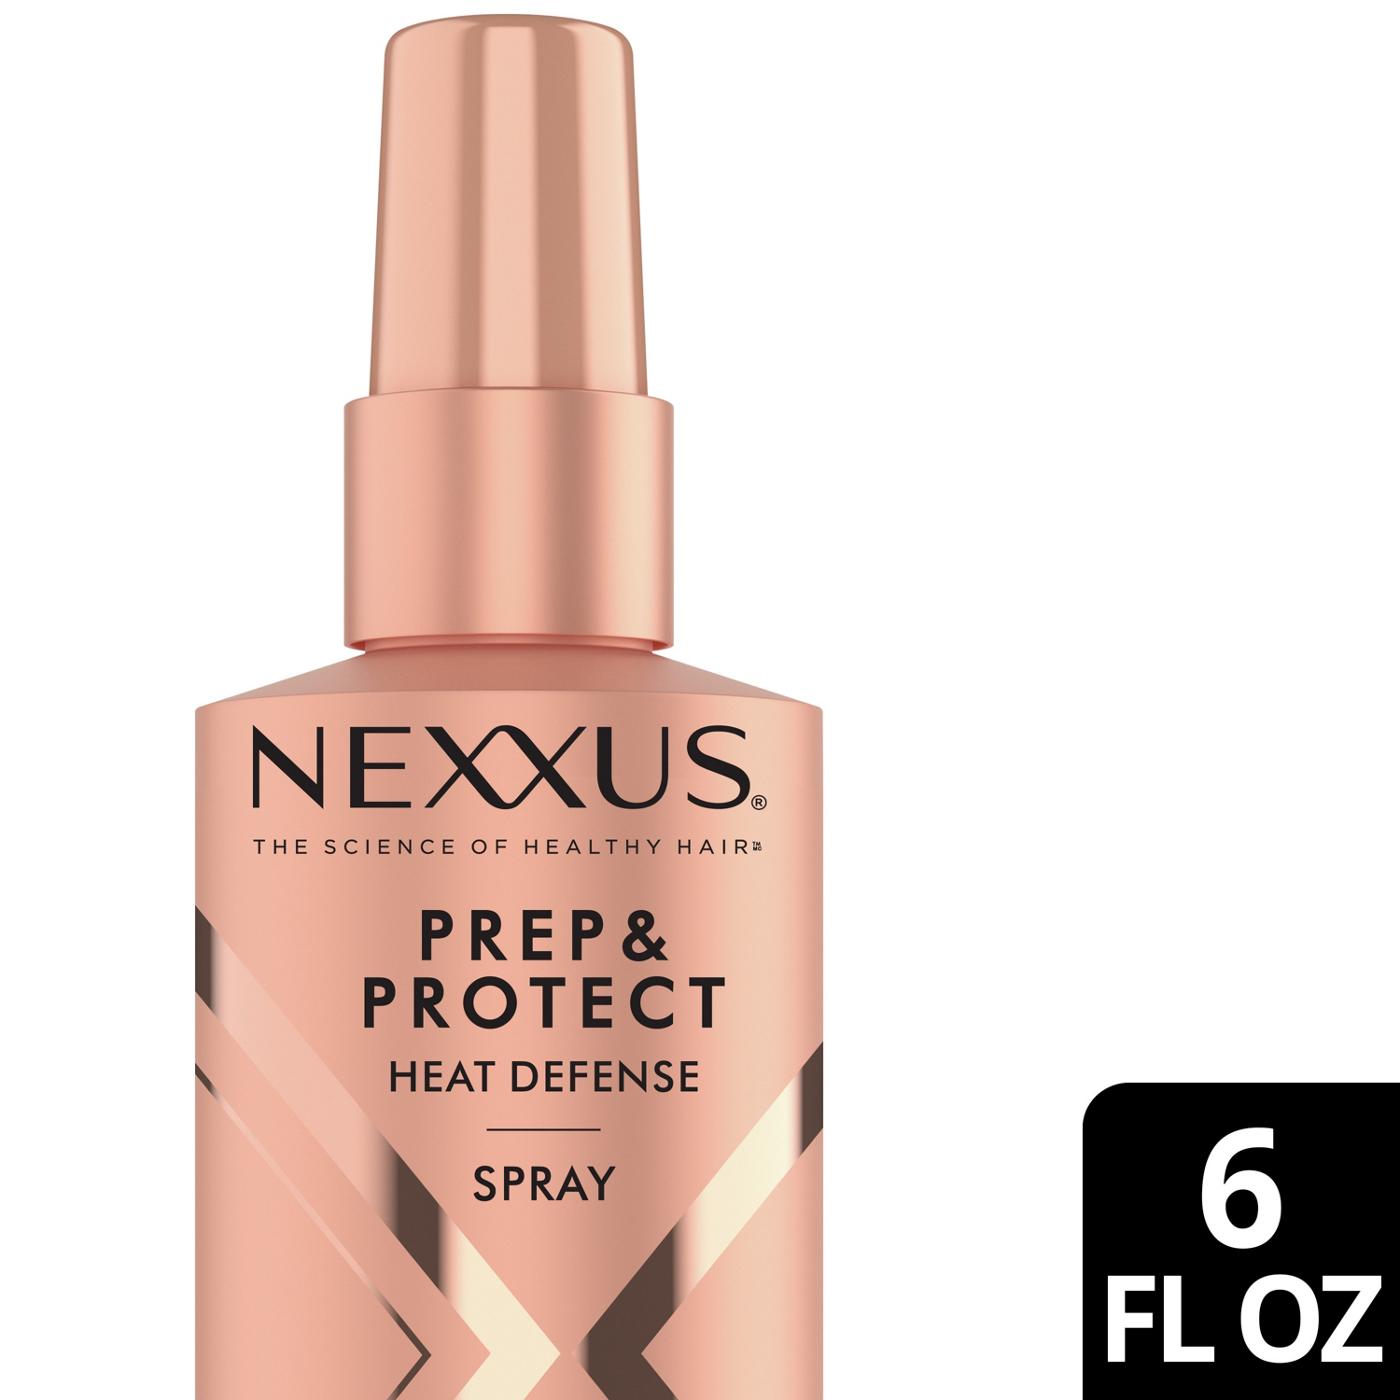 Nexxus Prep & Protect Heat Defense Spray; image 4 of 4